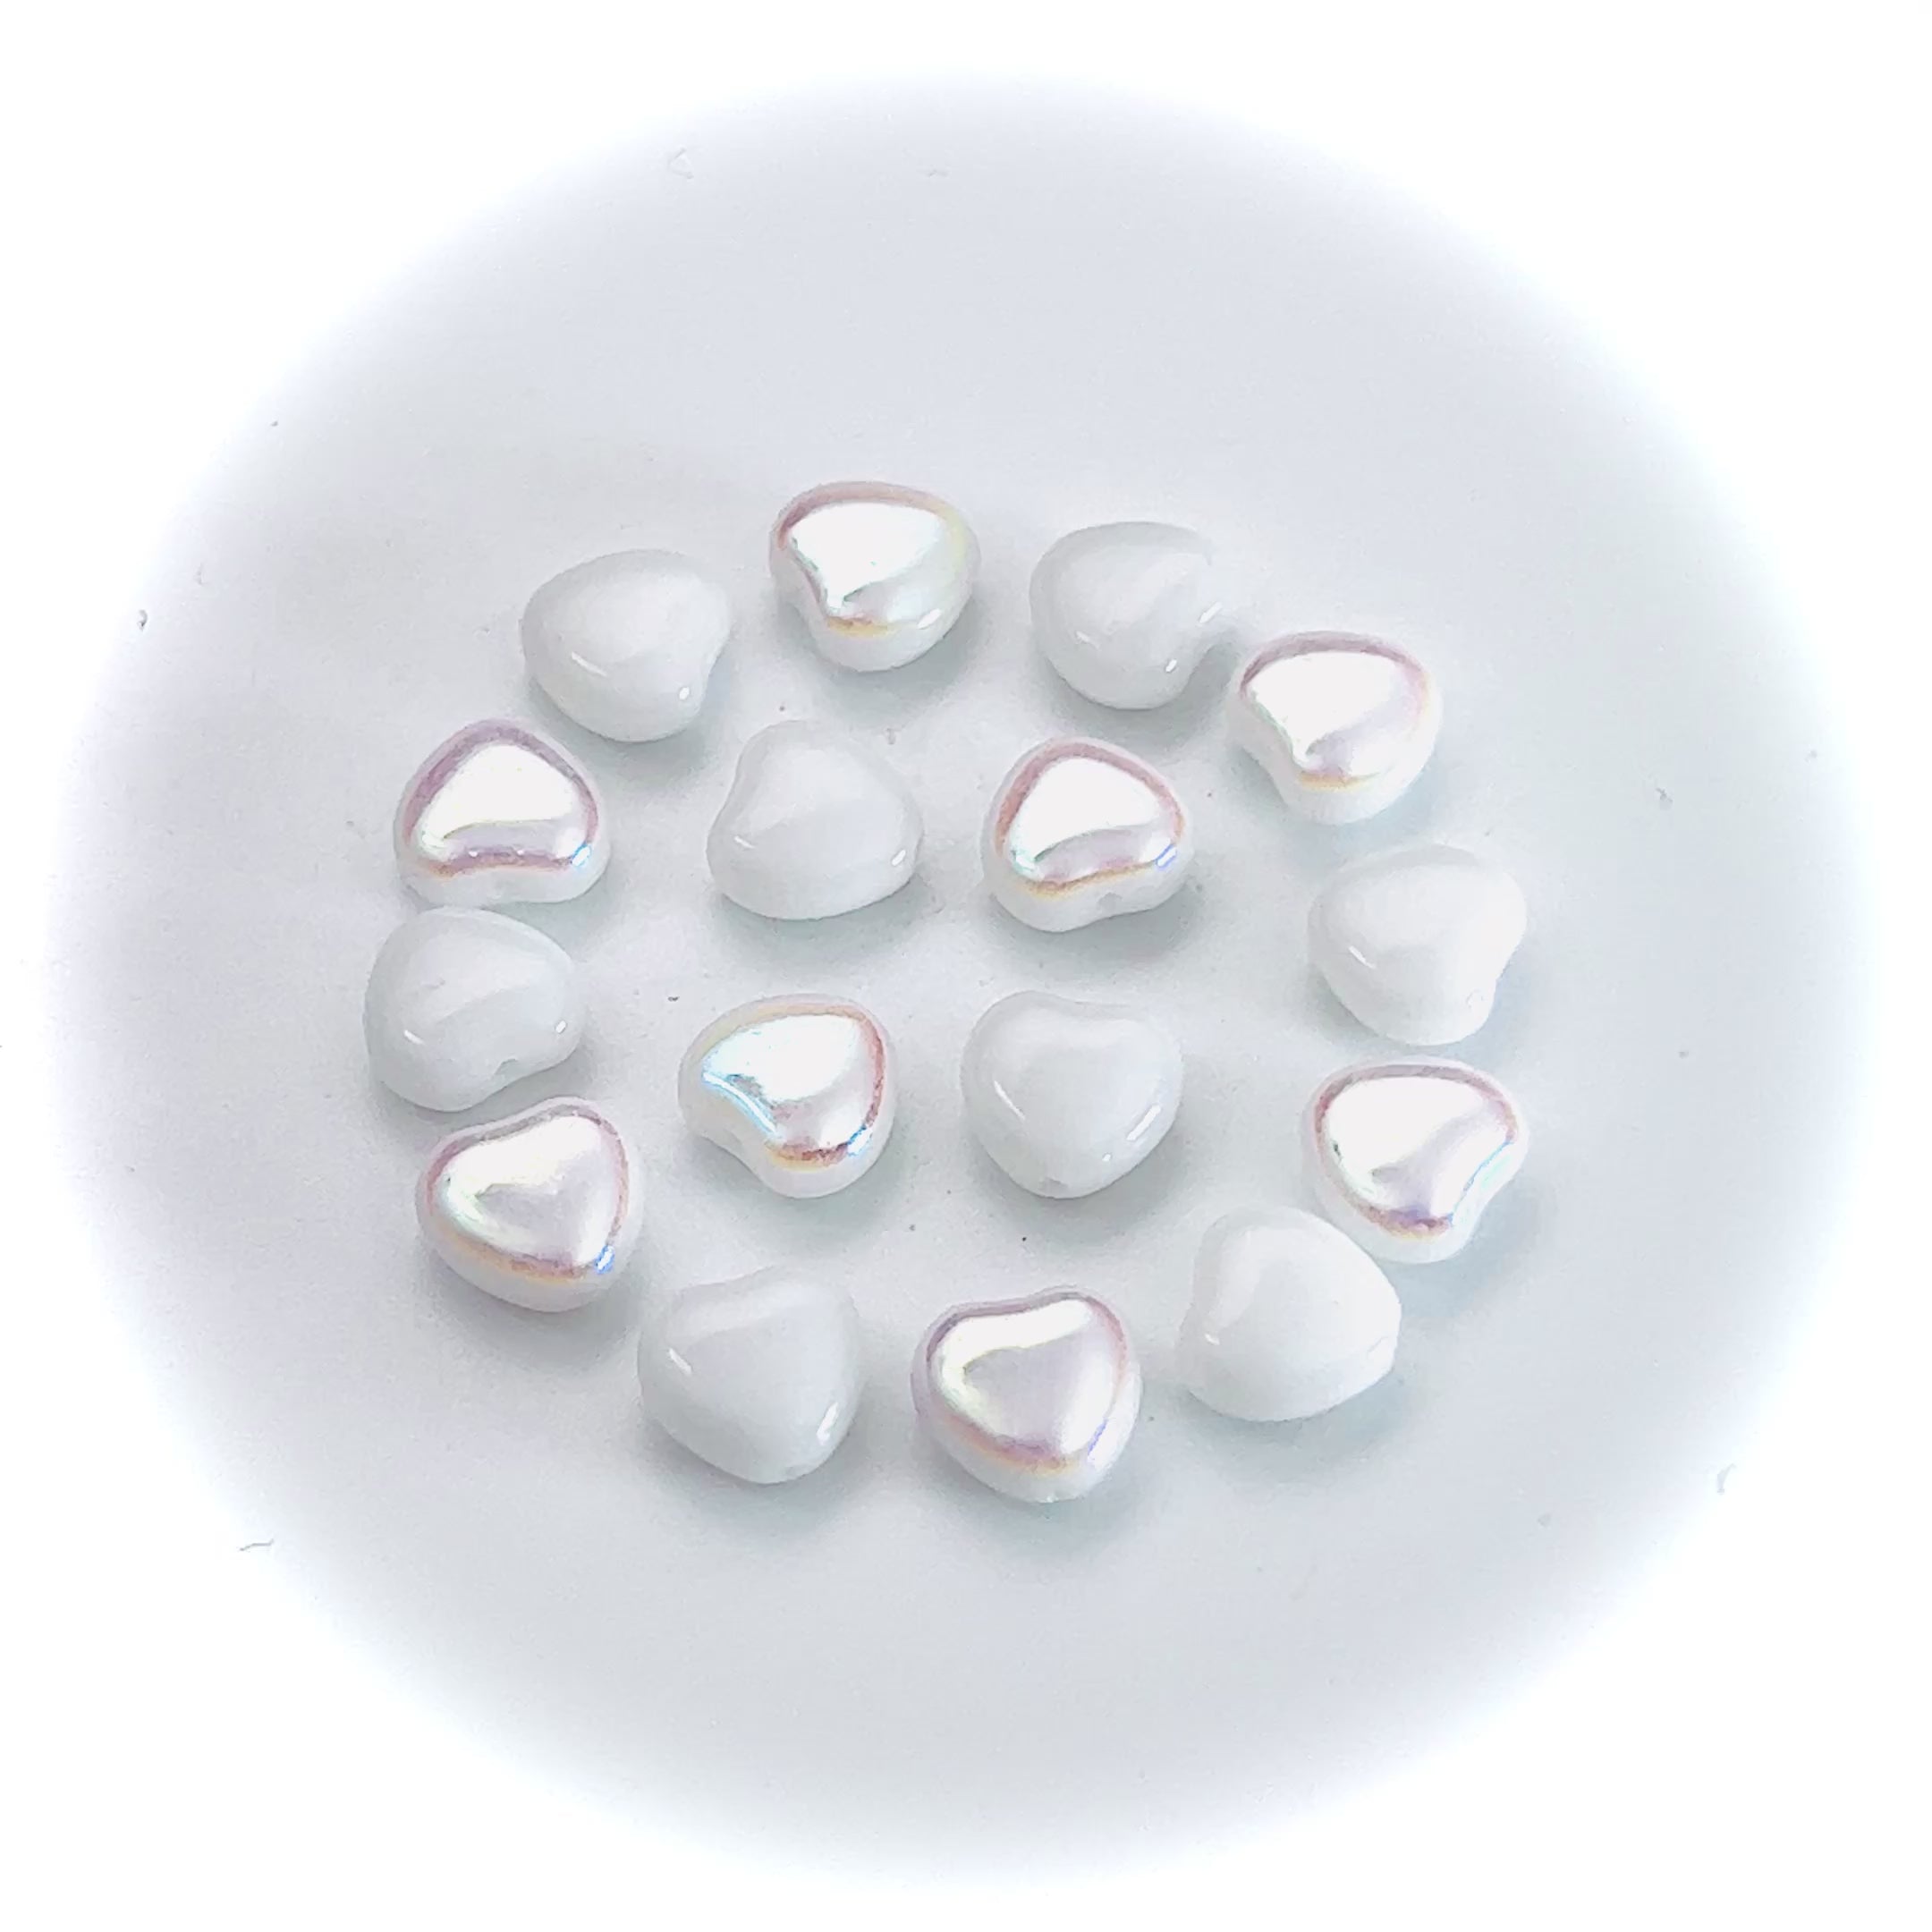 Light Purple Opaque 20mm Round Plastic Beads - White Hearts (10pcs)